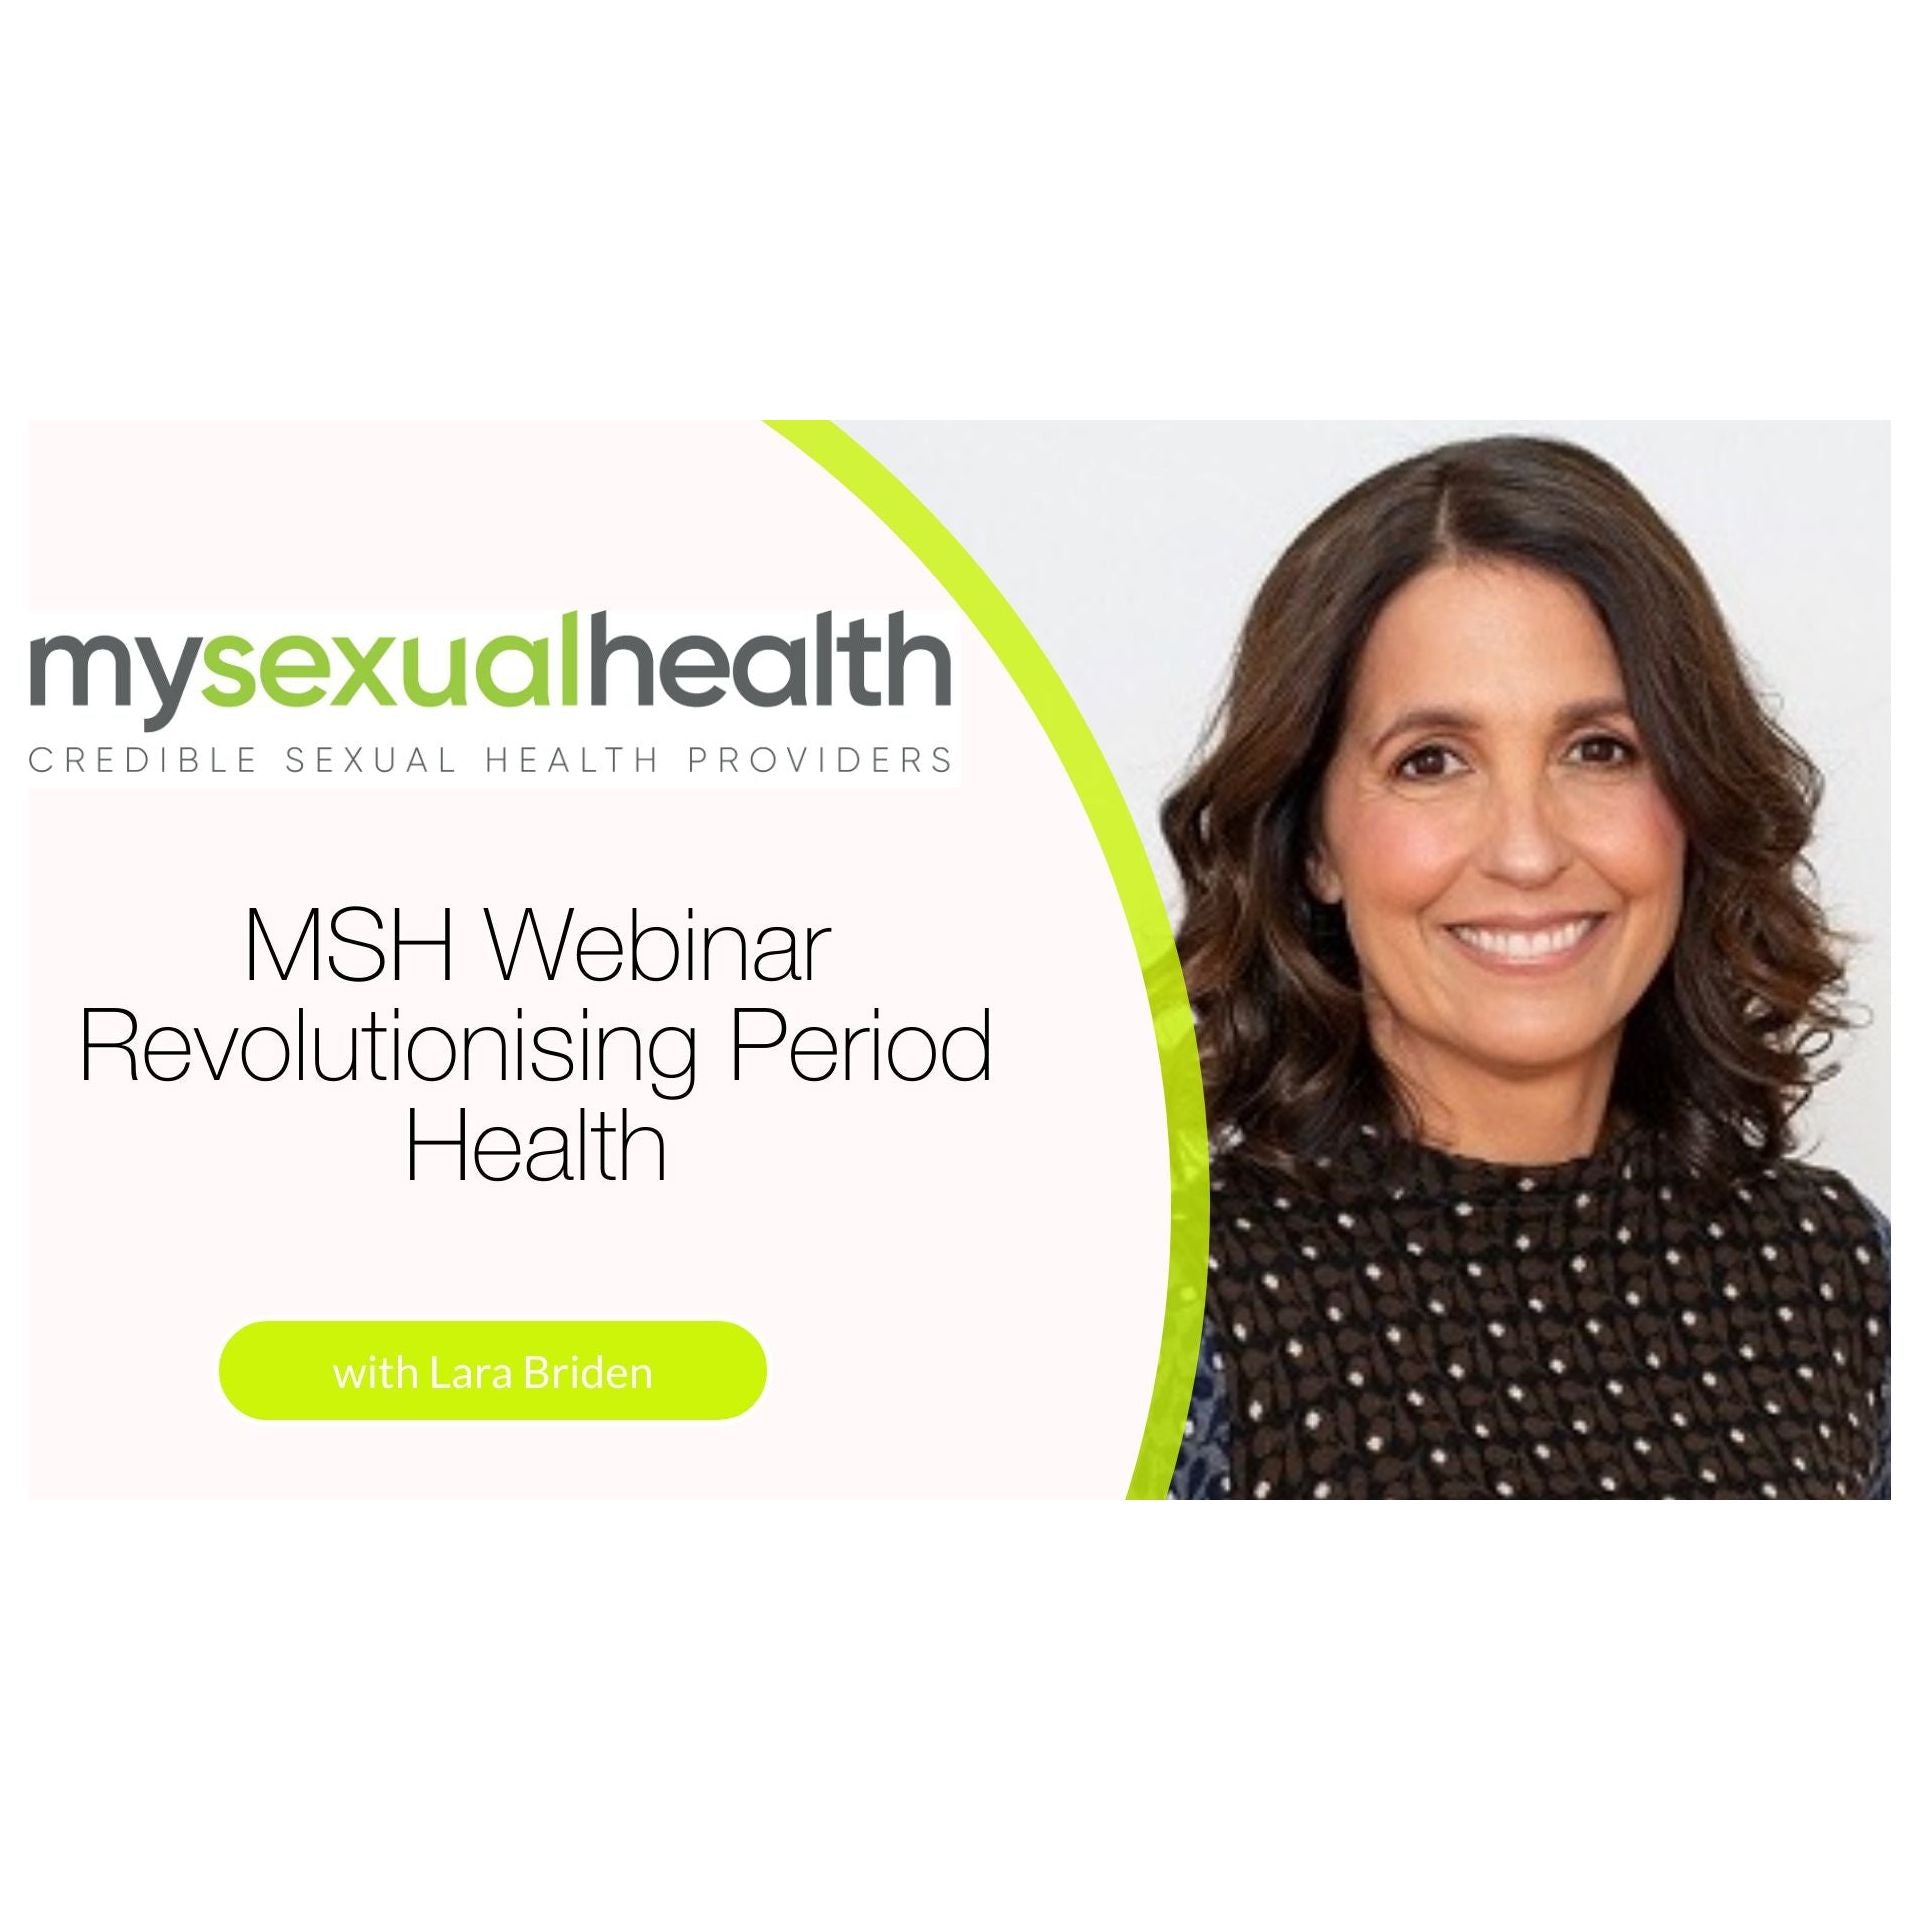 MSH WEBINAR: Revolutionising Period Health with Lara Briden and Dr Elna Rudolph